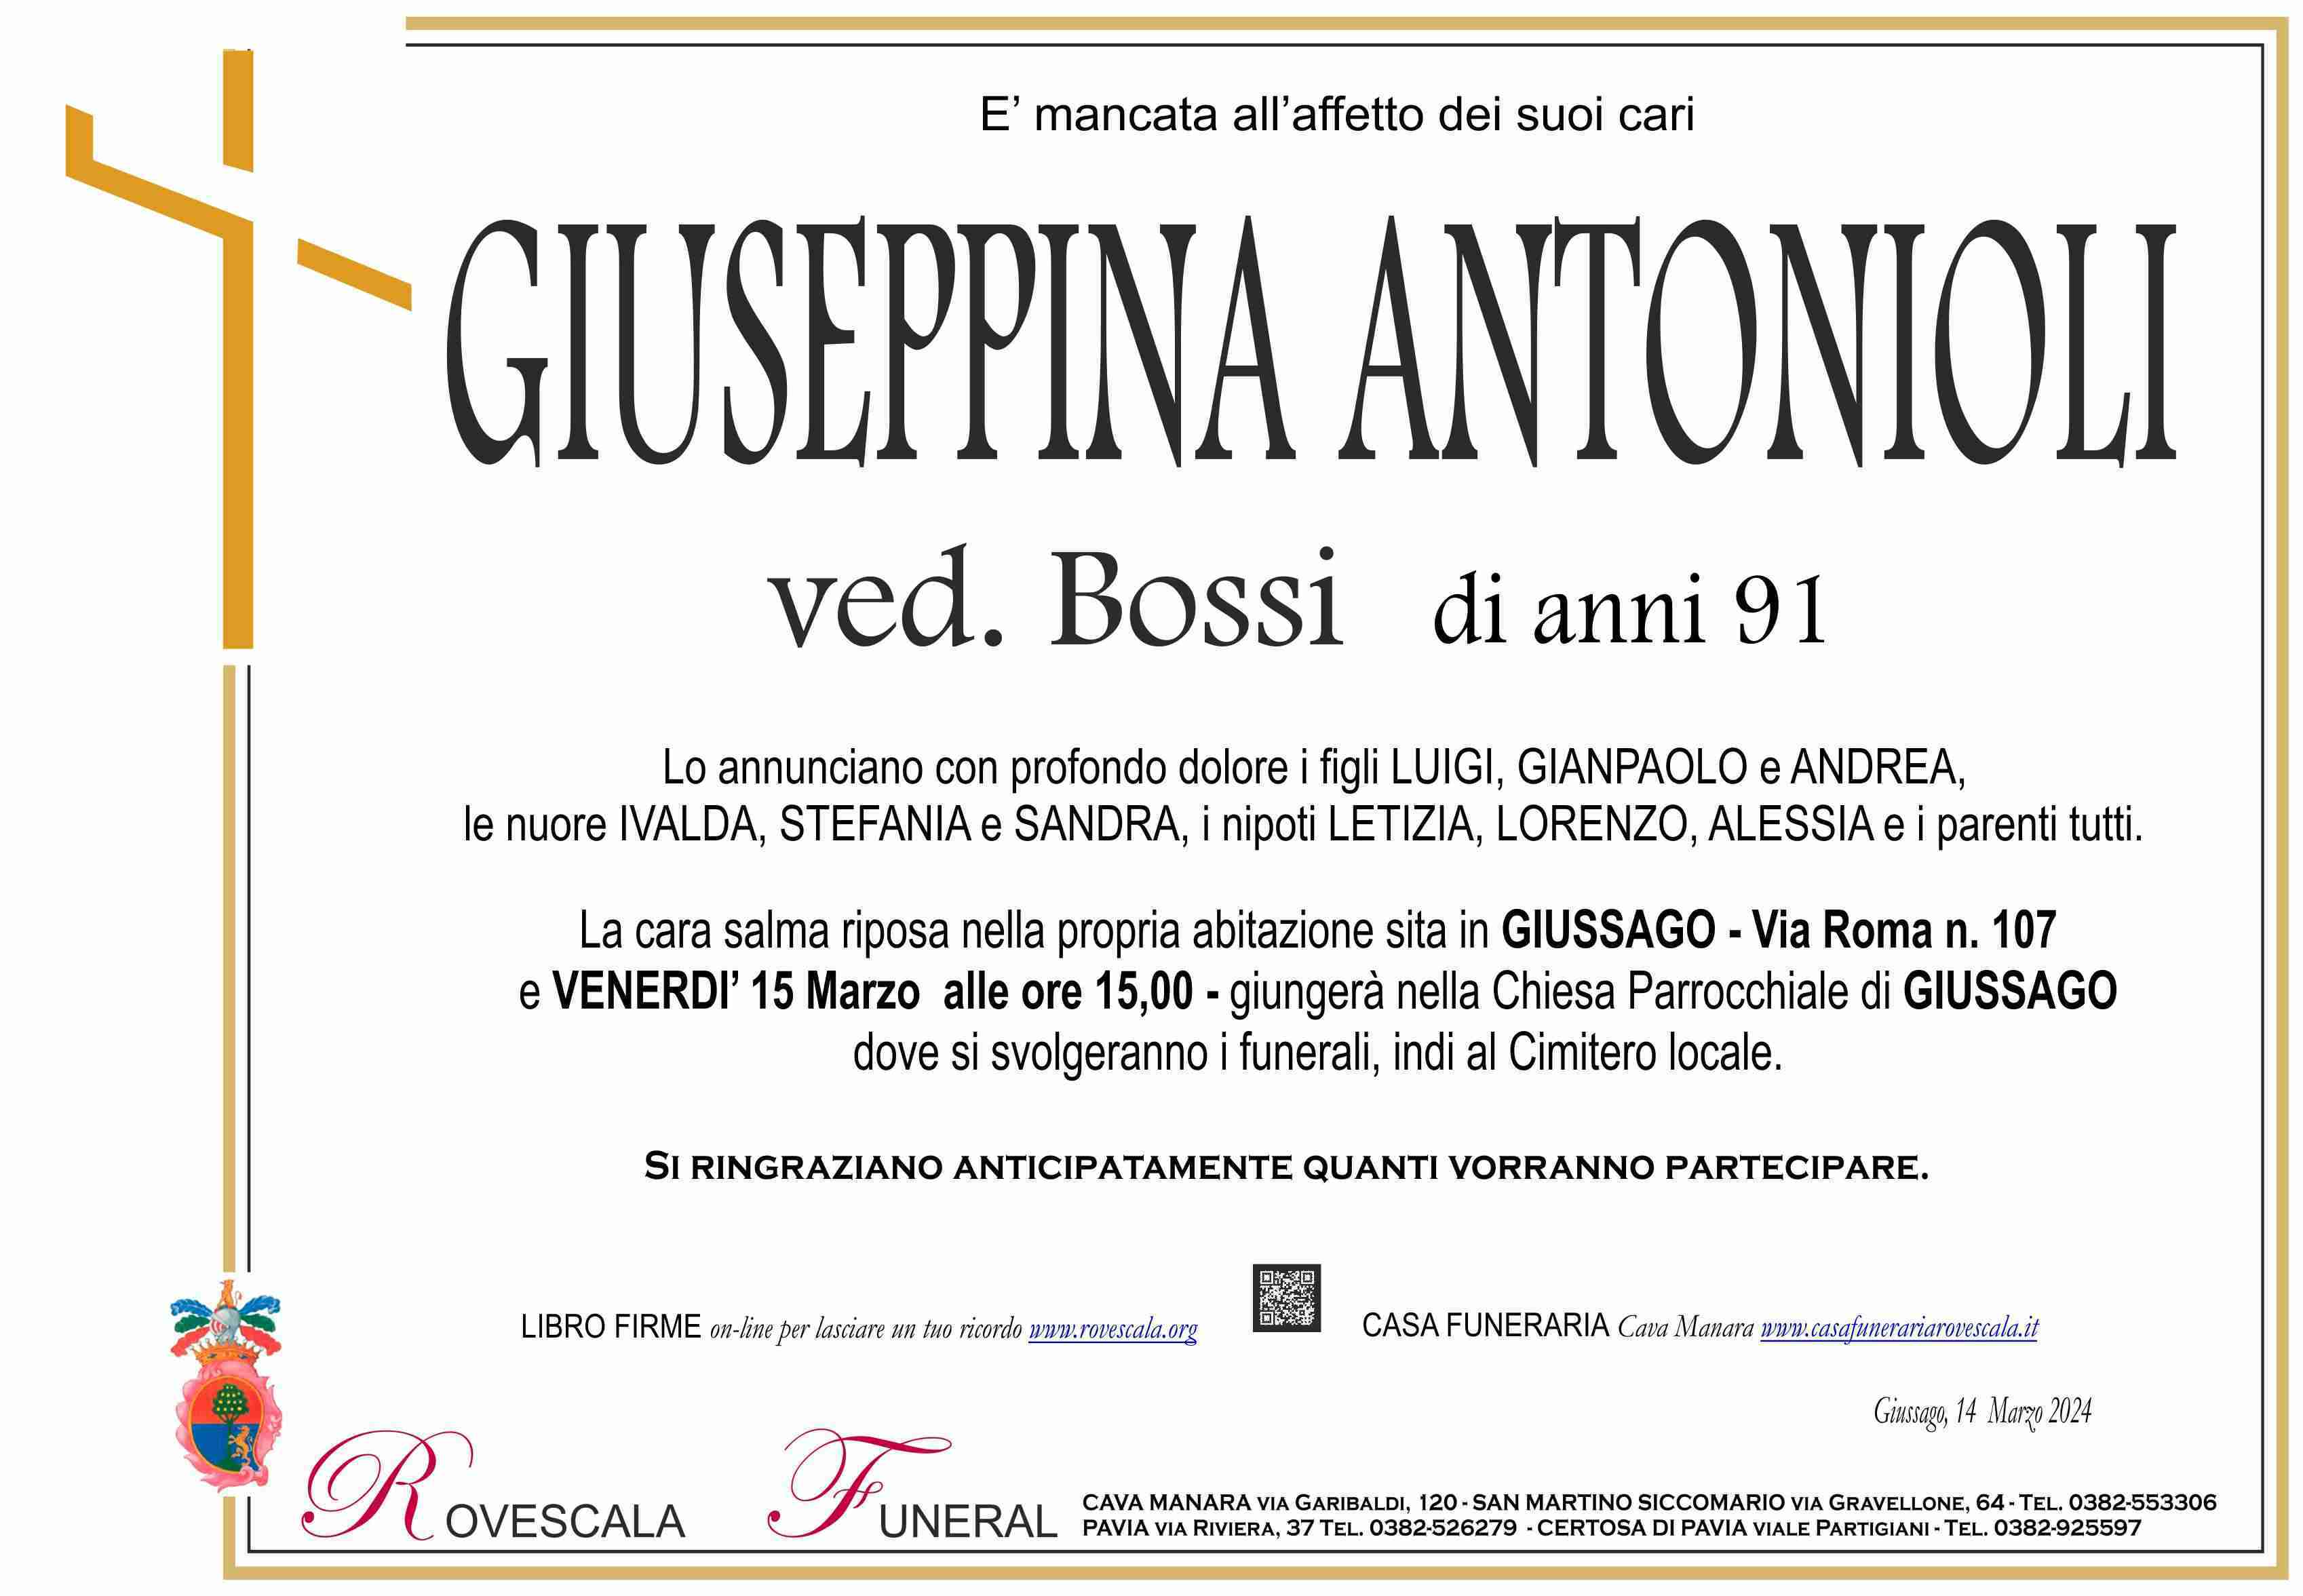 Giuseppina Antonioli